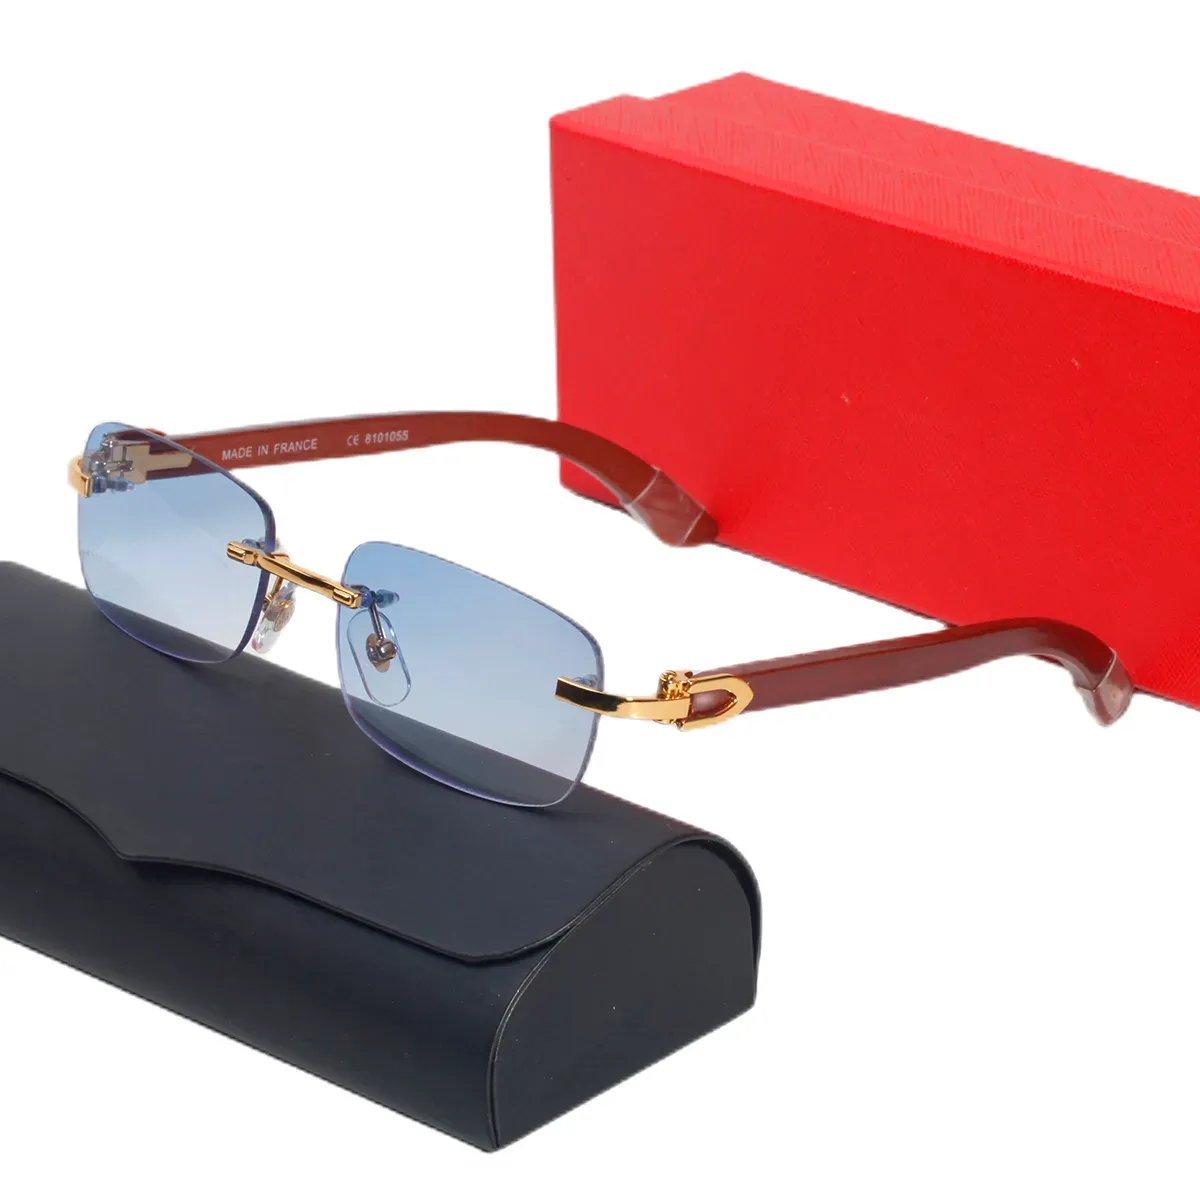 New buffalo horn sunglasses fashion carti glasses sport sun glasses for men women rimless rectangle eyeglasses with boxes case eyewear mens sunglasses